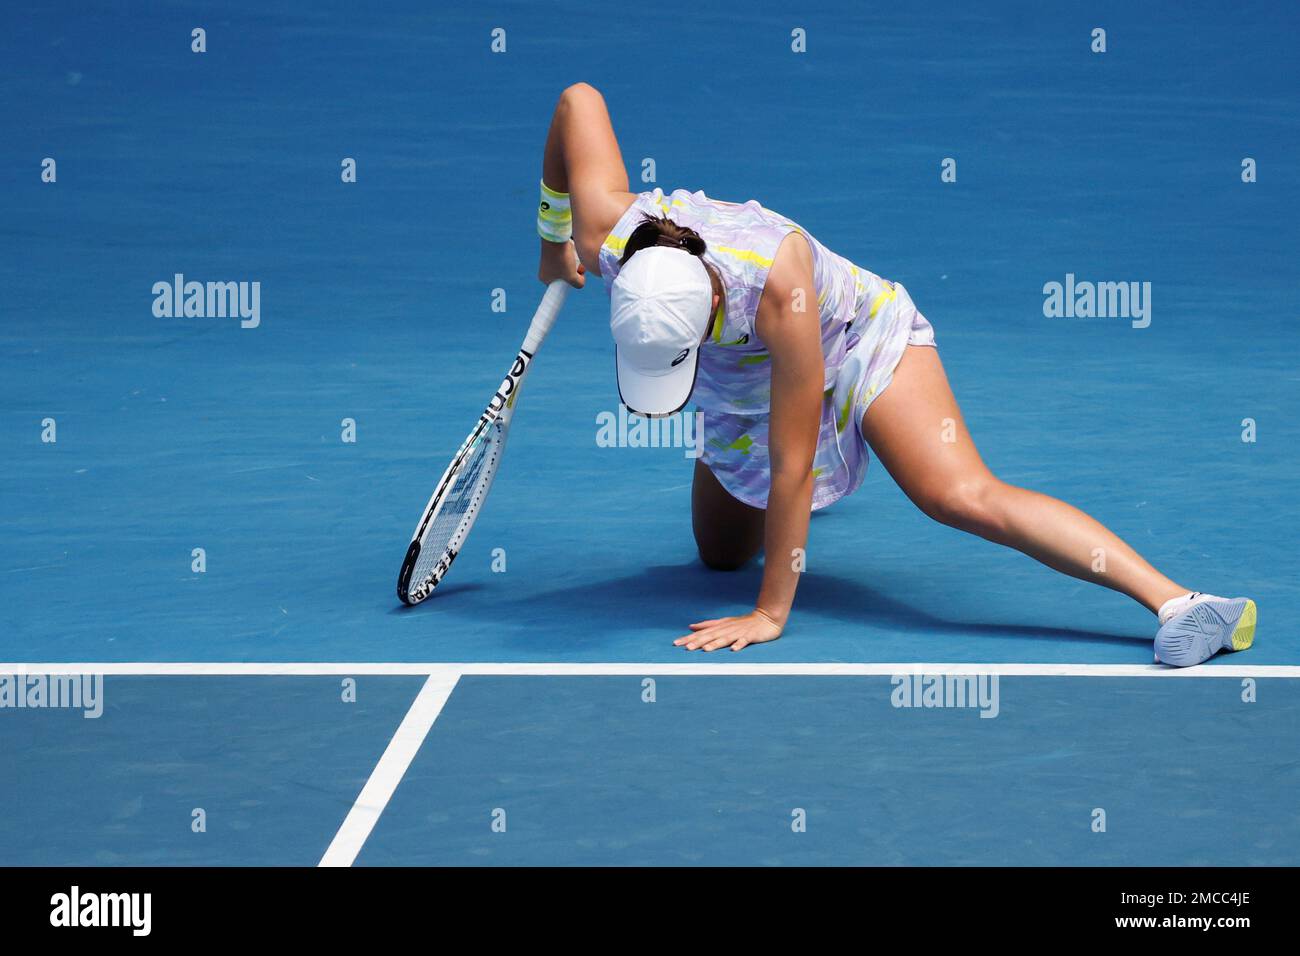 Iga Swiatek of Poland falls to the court during her quarterfinal against Kaia Kanepi of Estonia at the Australian Open tennis championships in Melbourne, Australia, Wednesday, Jan